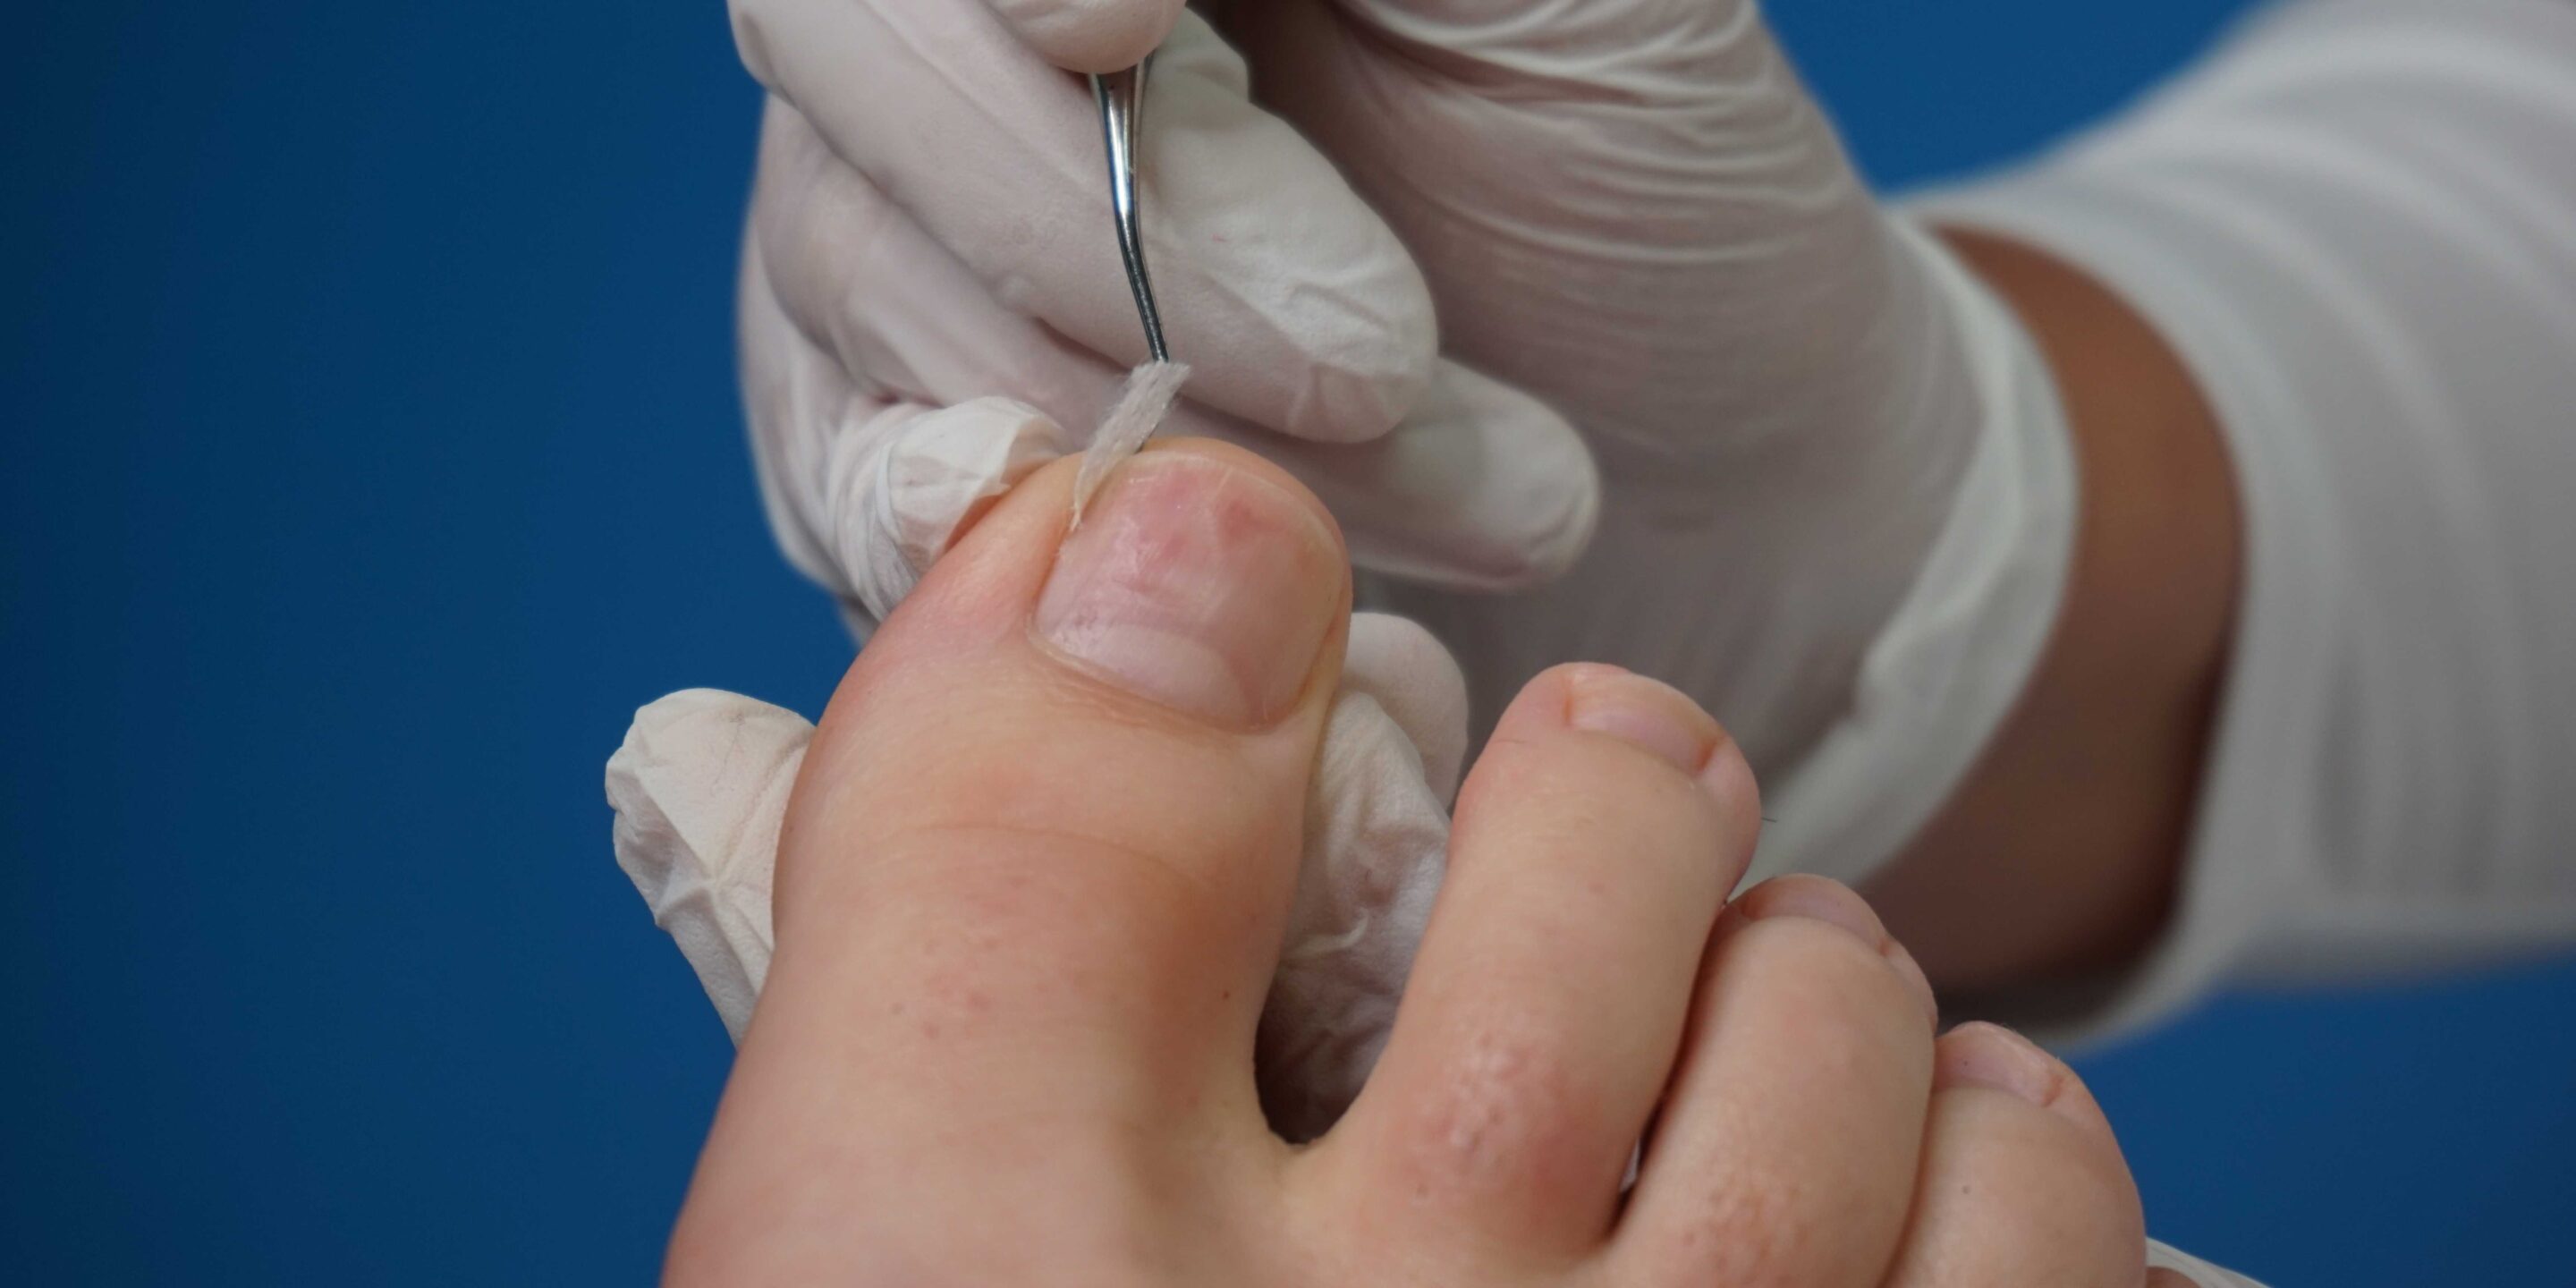 Podiatry, Chiropodist, medical foot care, podiatrist, ingrown toenail, fix an ingrown toenail